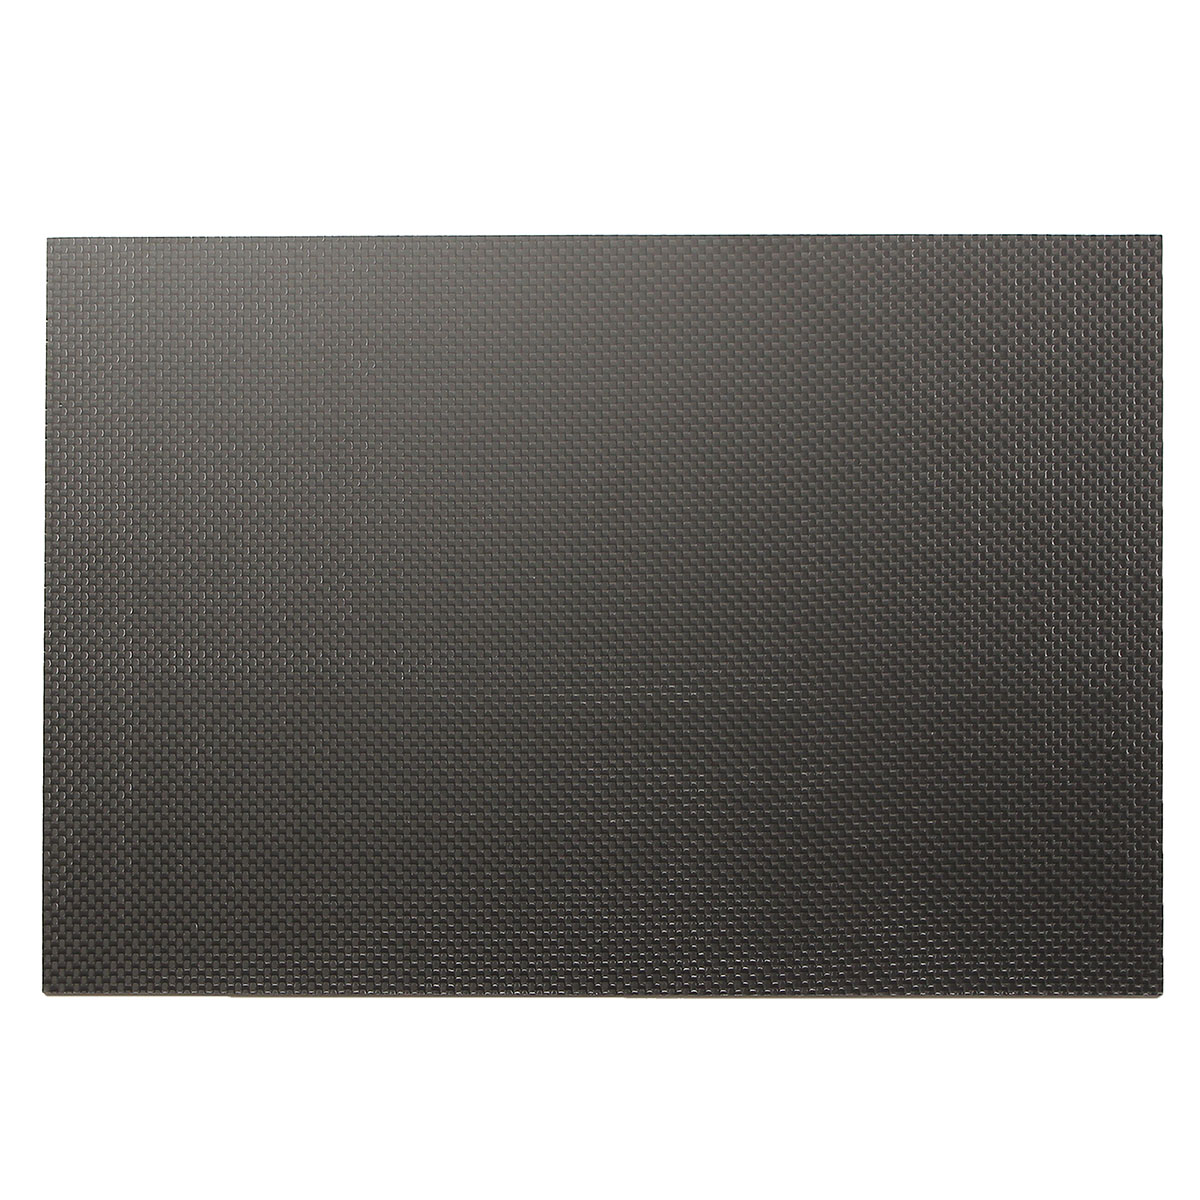 200x250x 0.5-2 Plain Weave mm Matte Carbon Fiber Plate Panel Sheet 3K Twill